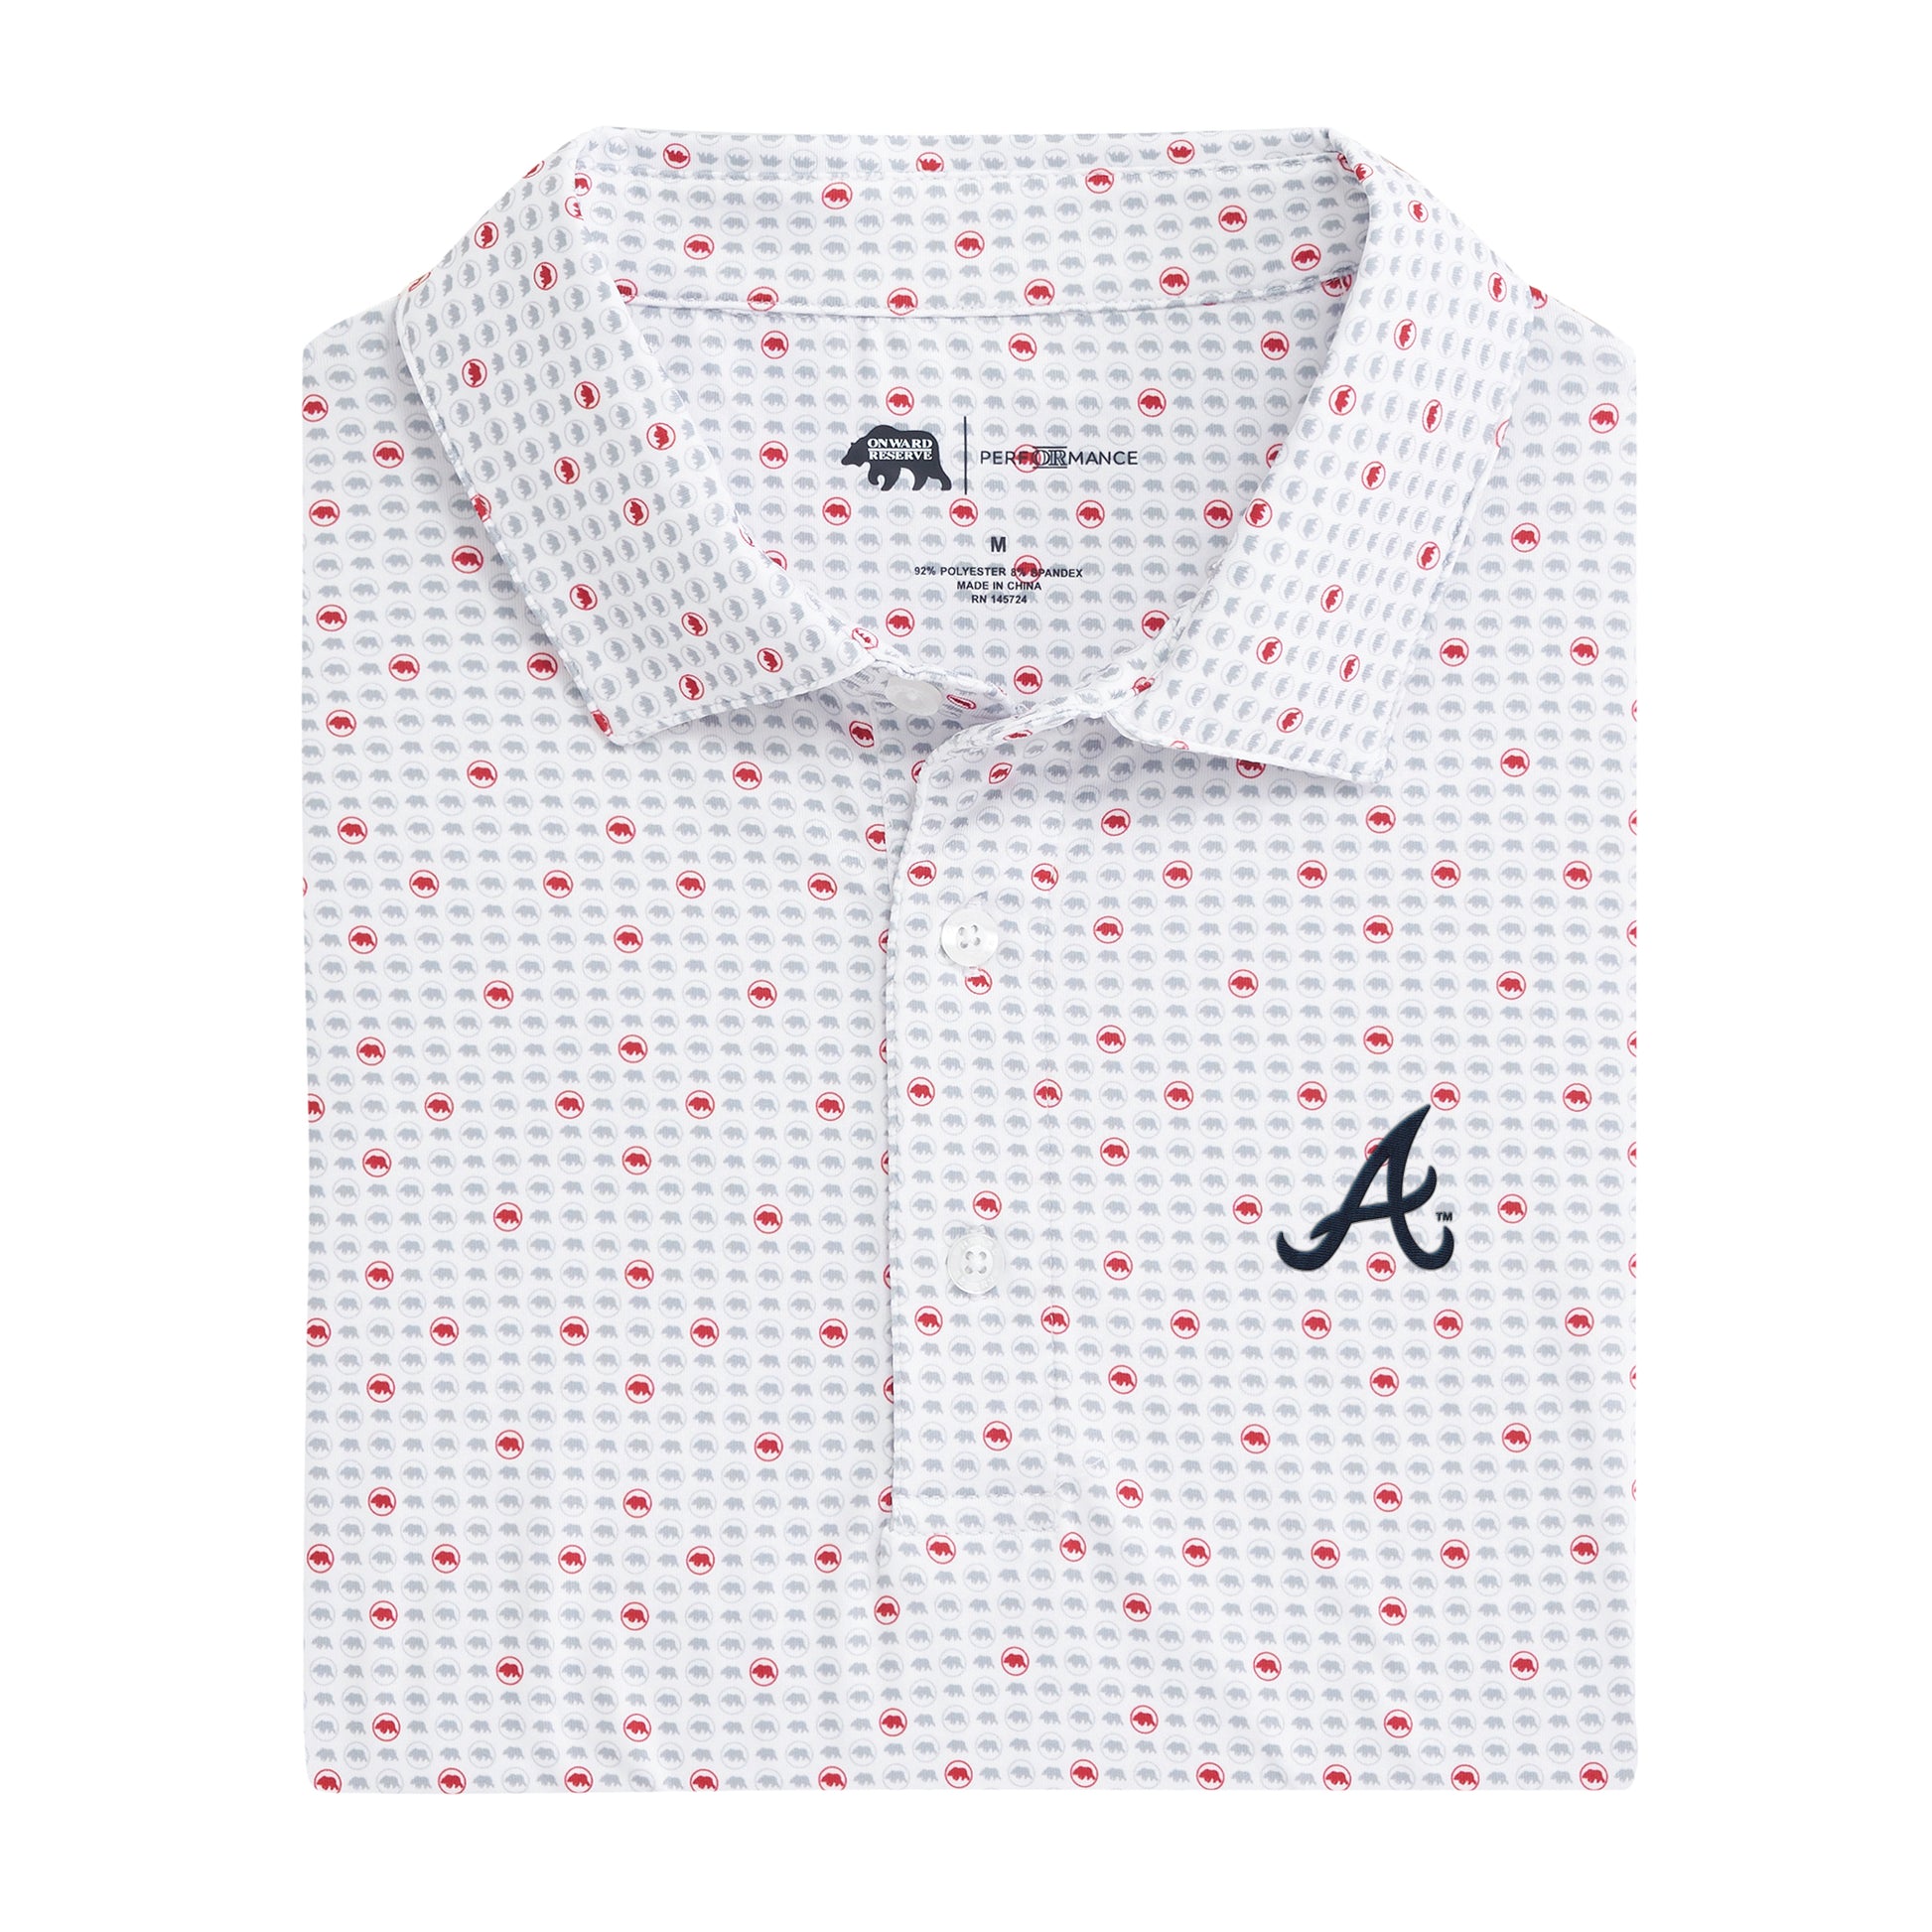 ONWARD RESERVE Performance Atlanta Braves Short Sleeve Polo Shirt Size L  NWT🔥